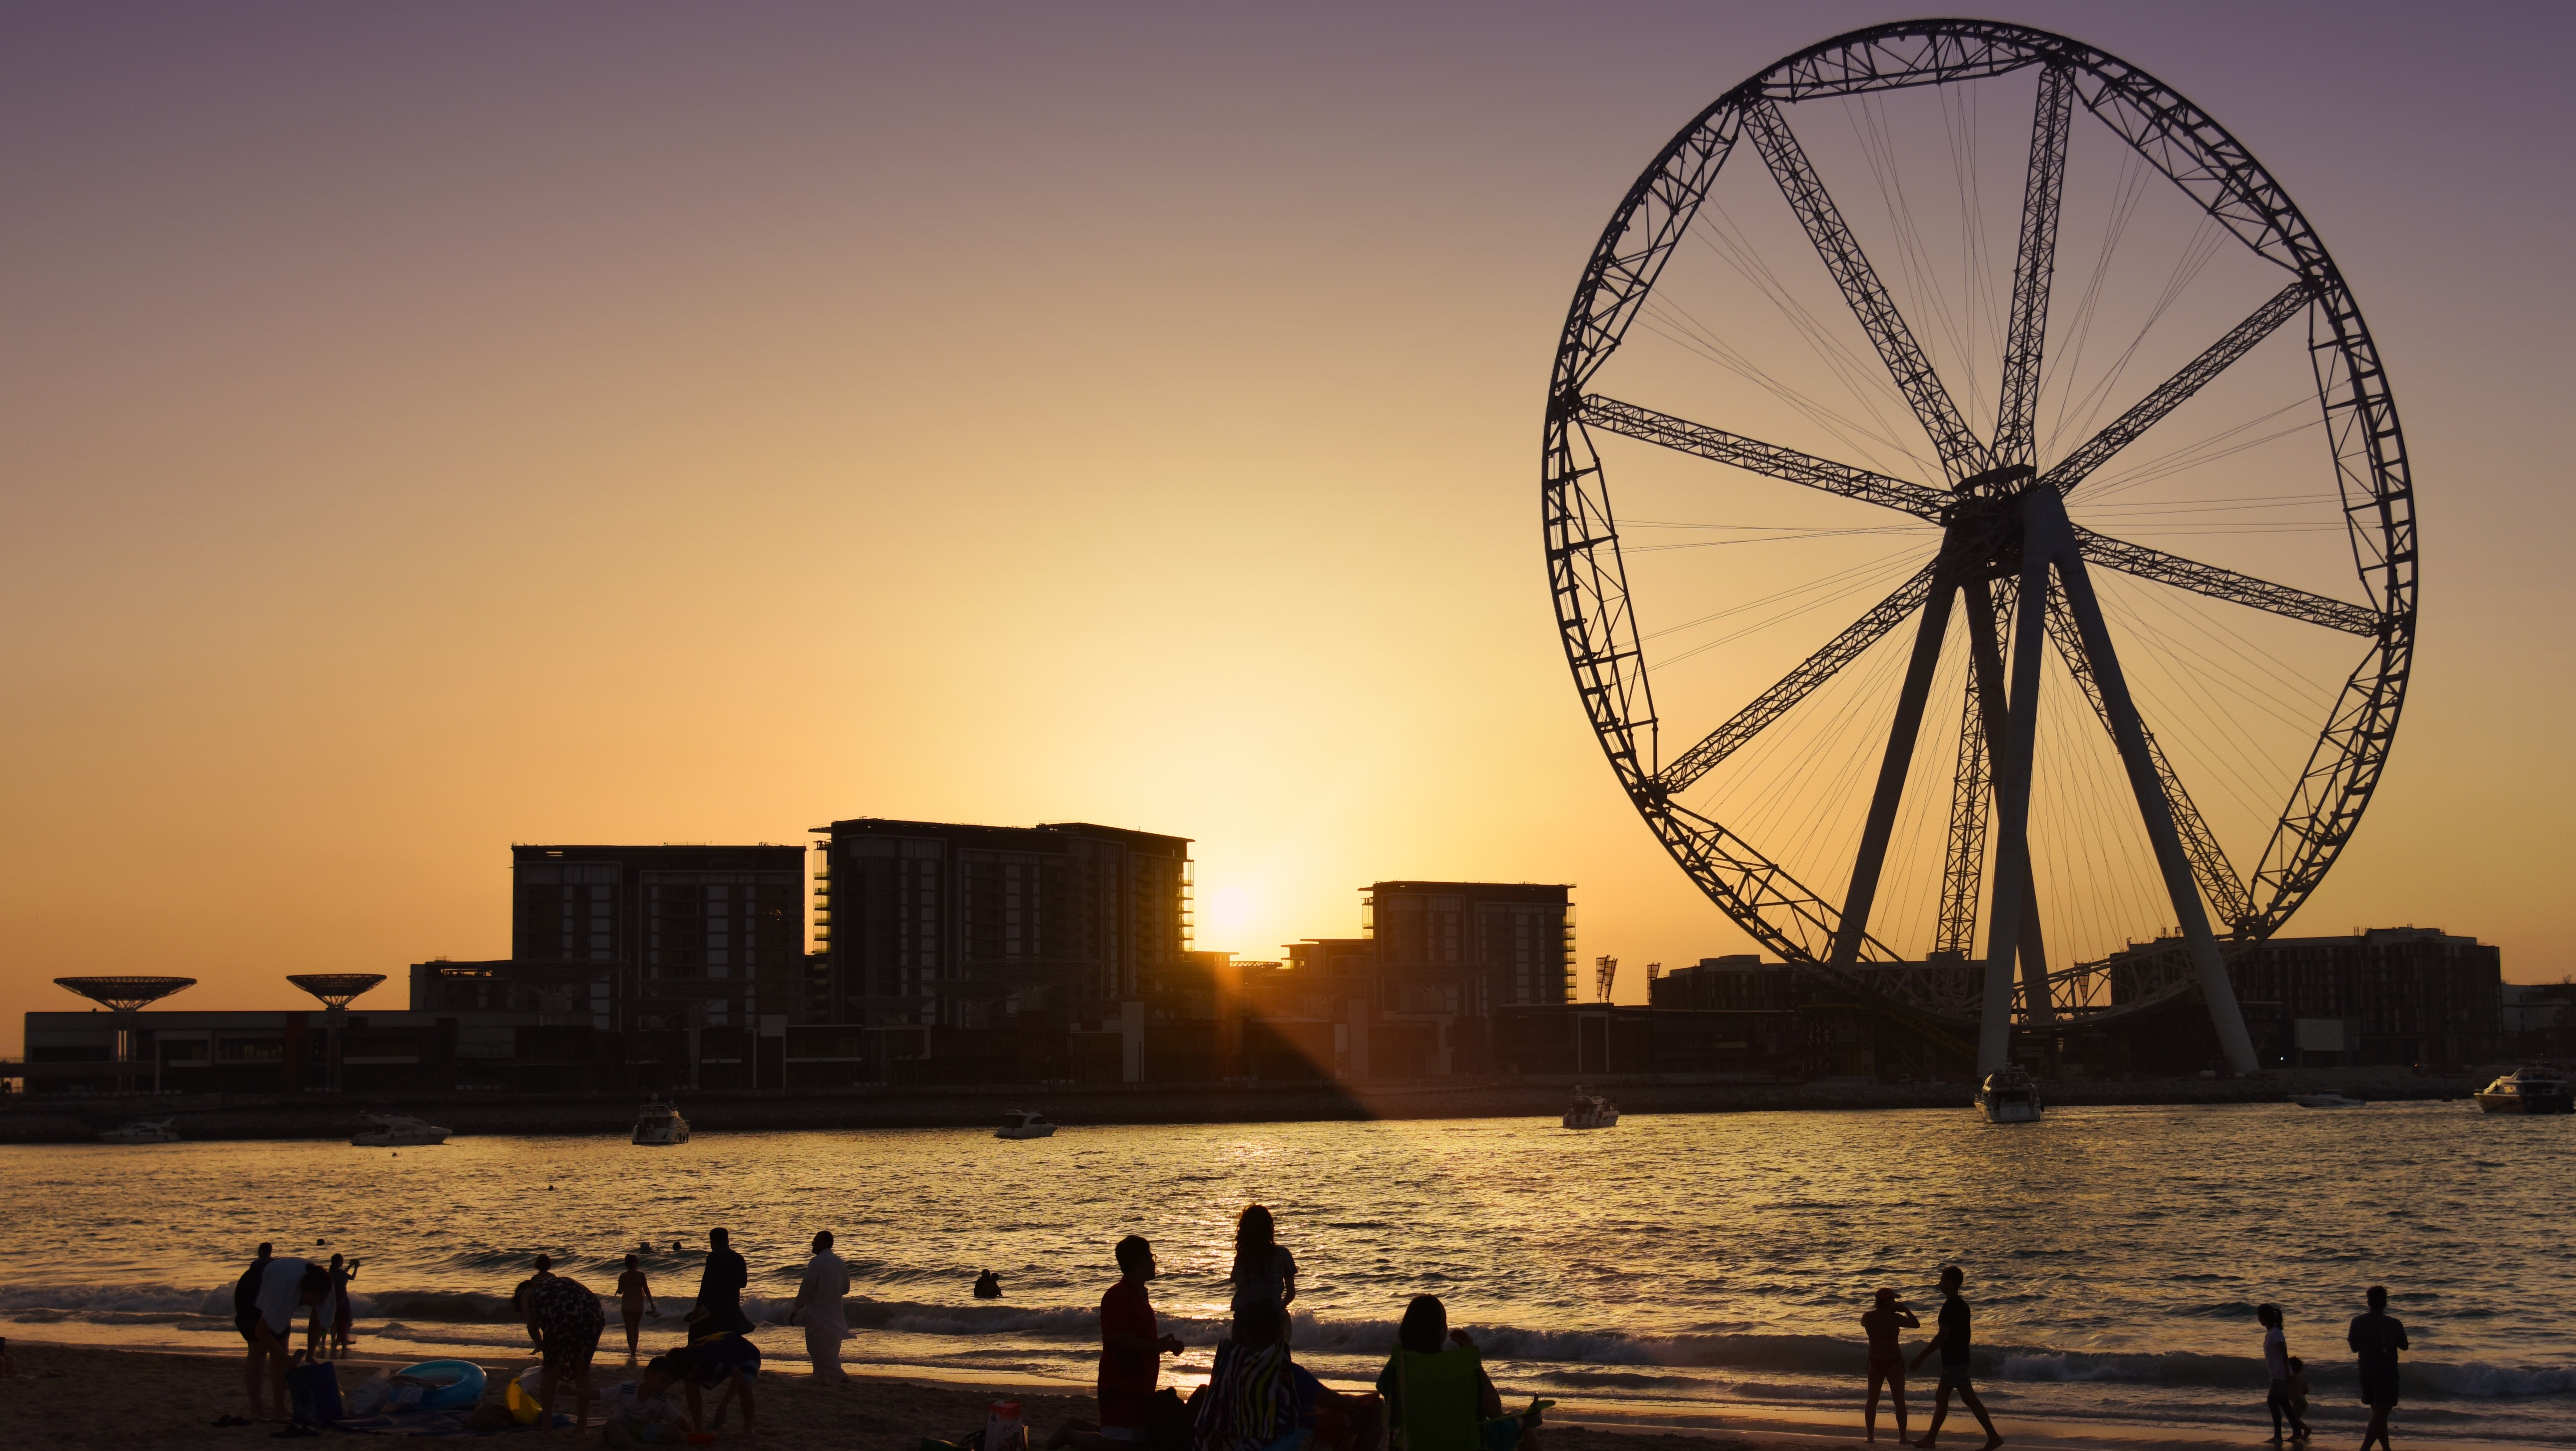 Dubai Wheel at sunset; Shutterstock ID 1079856383; purchase_order: na; job: CJ_Feb_23; client: ; other: 